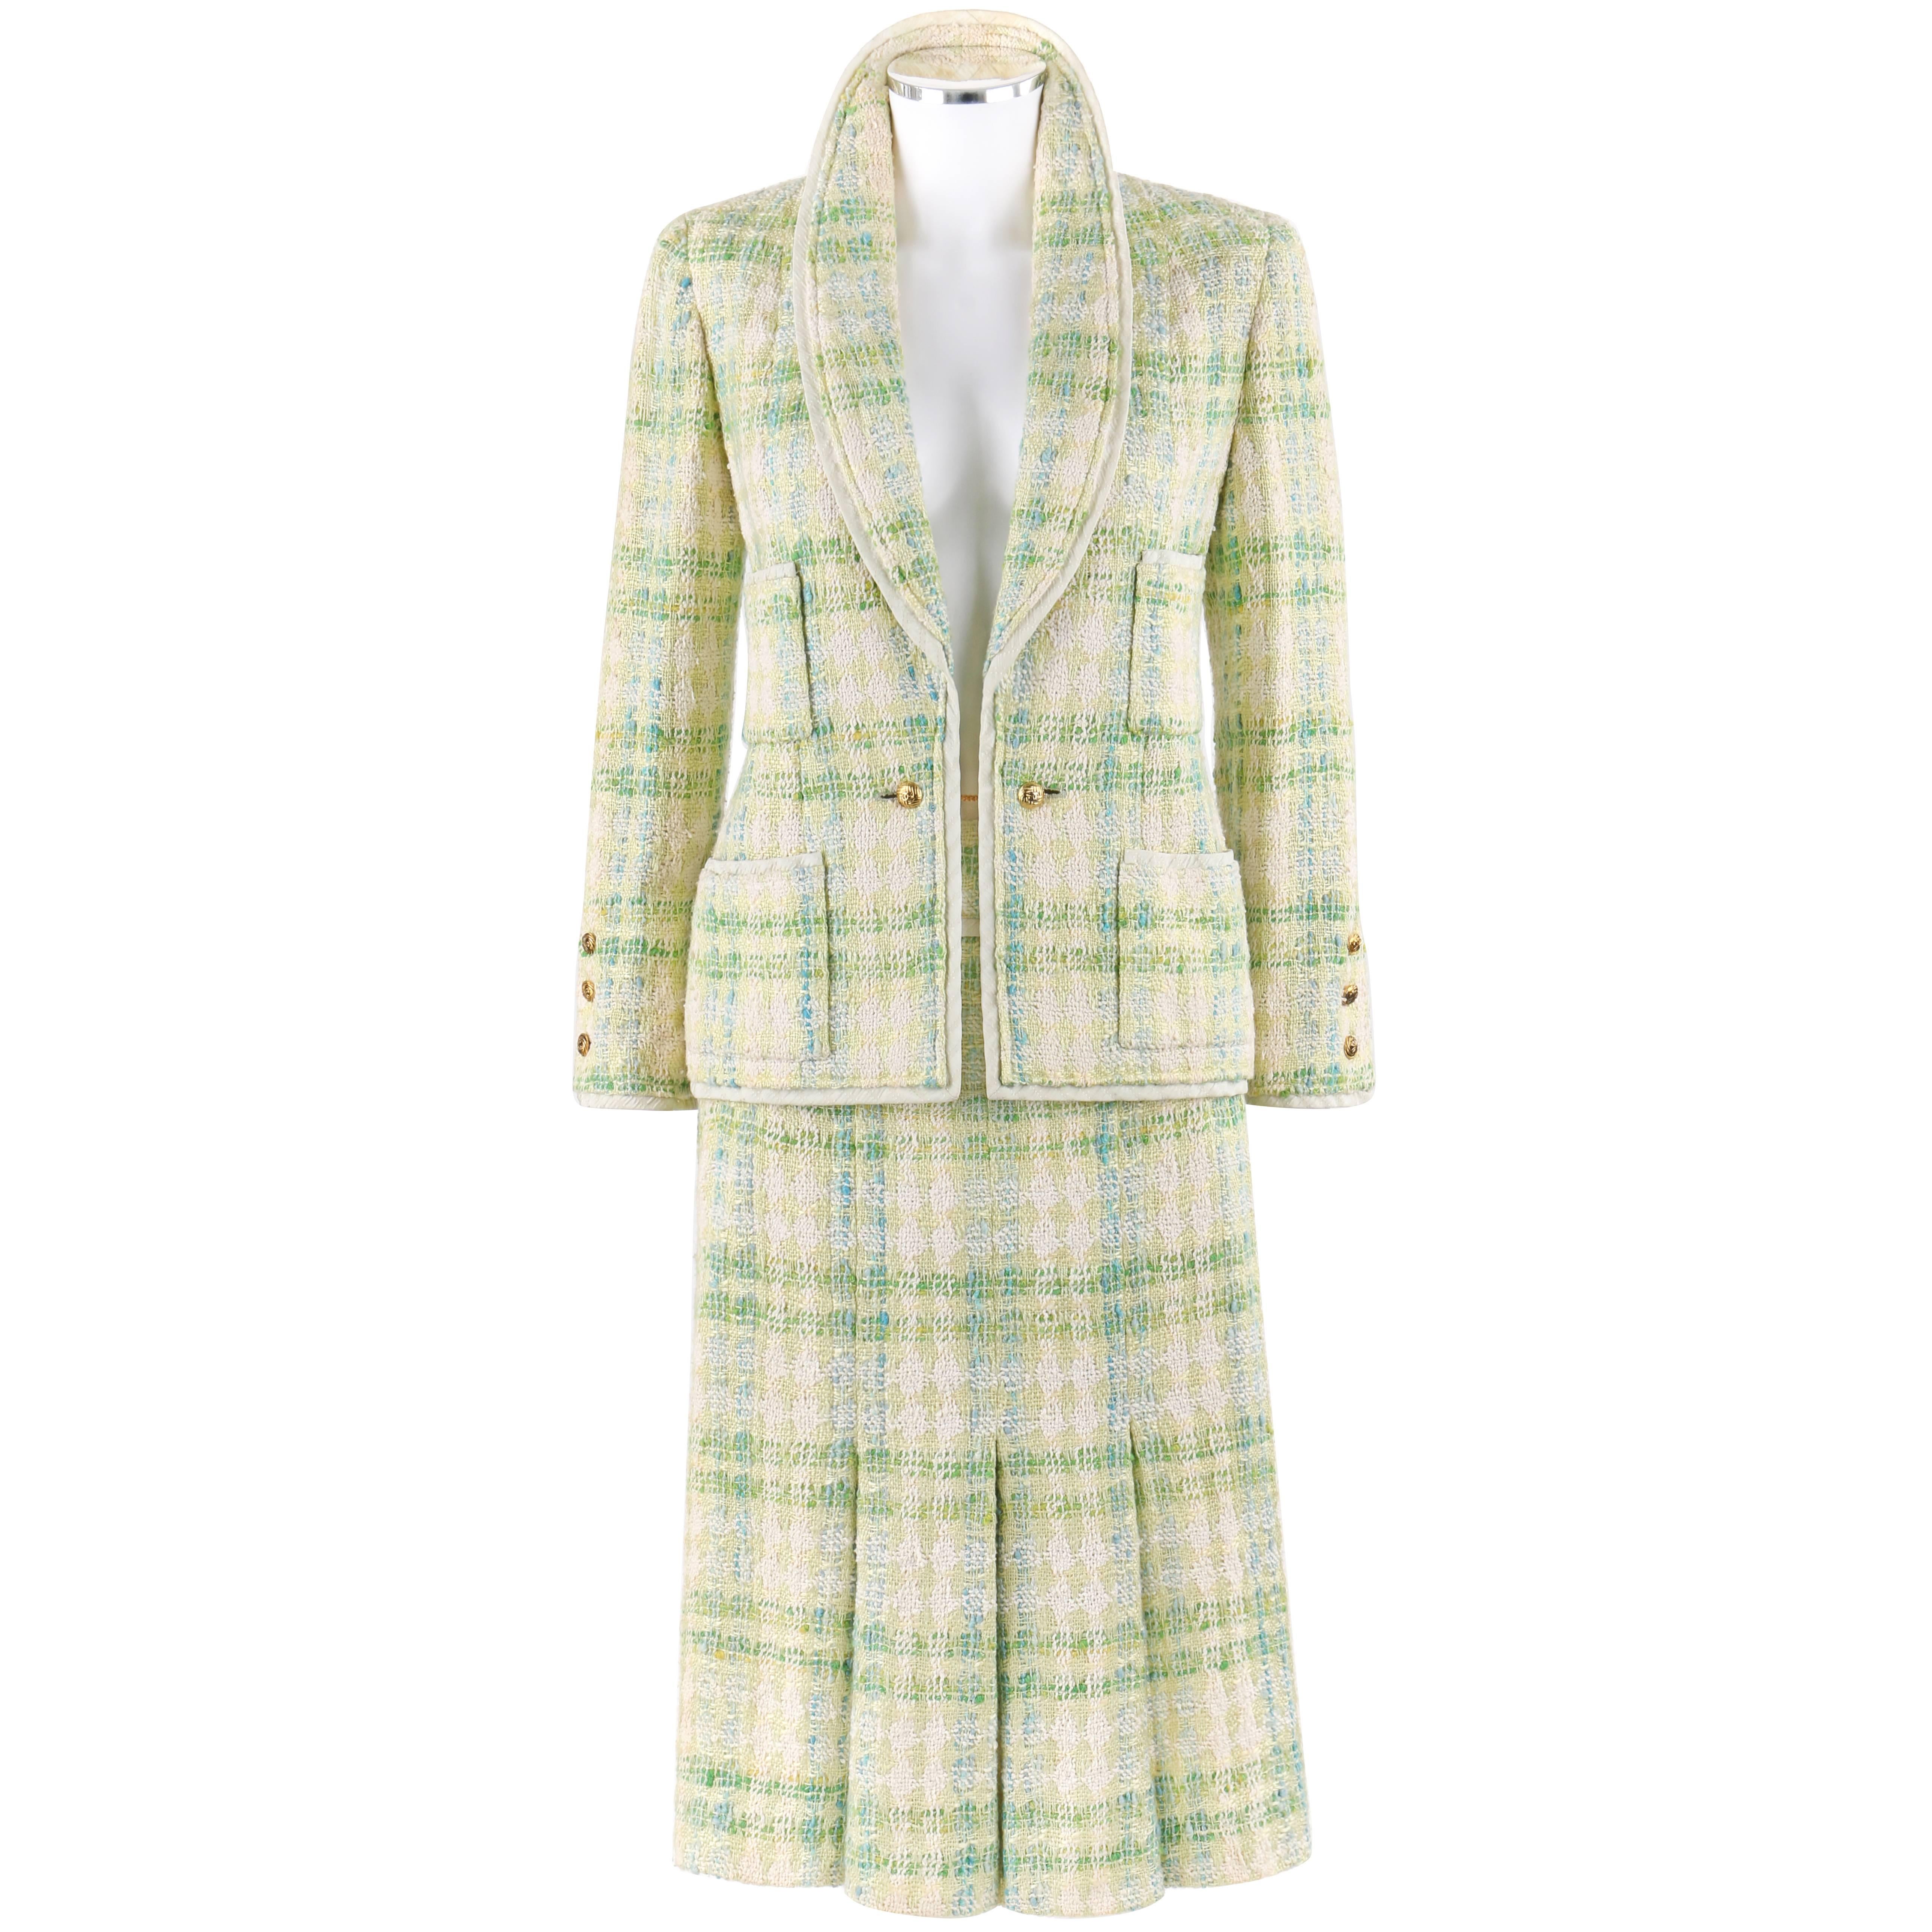 CHANEL Boutique S/S 1984 2 Pc Classic Tweed Blazer Jacket Skirt Suit Set 40  / 46